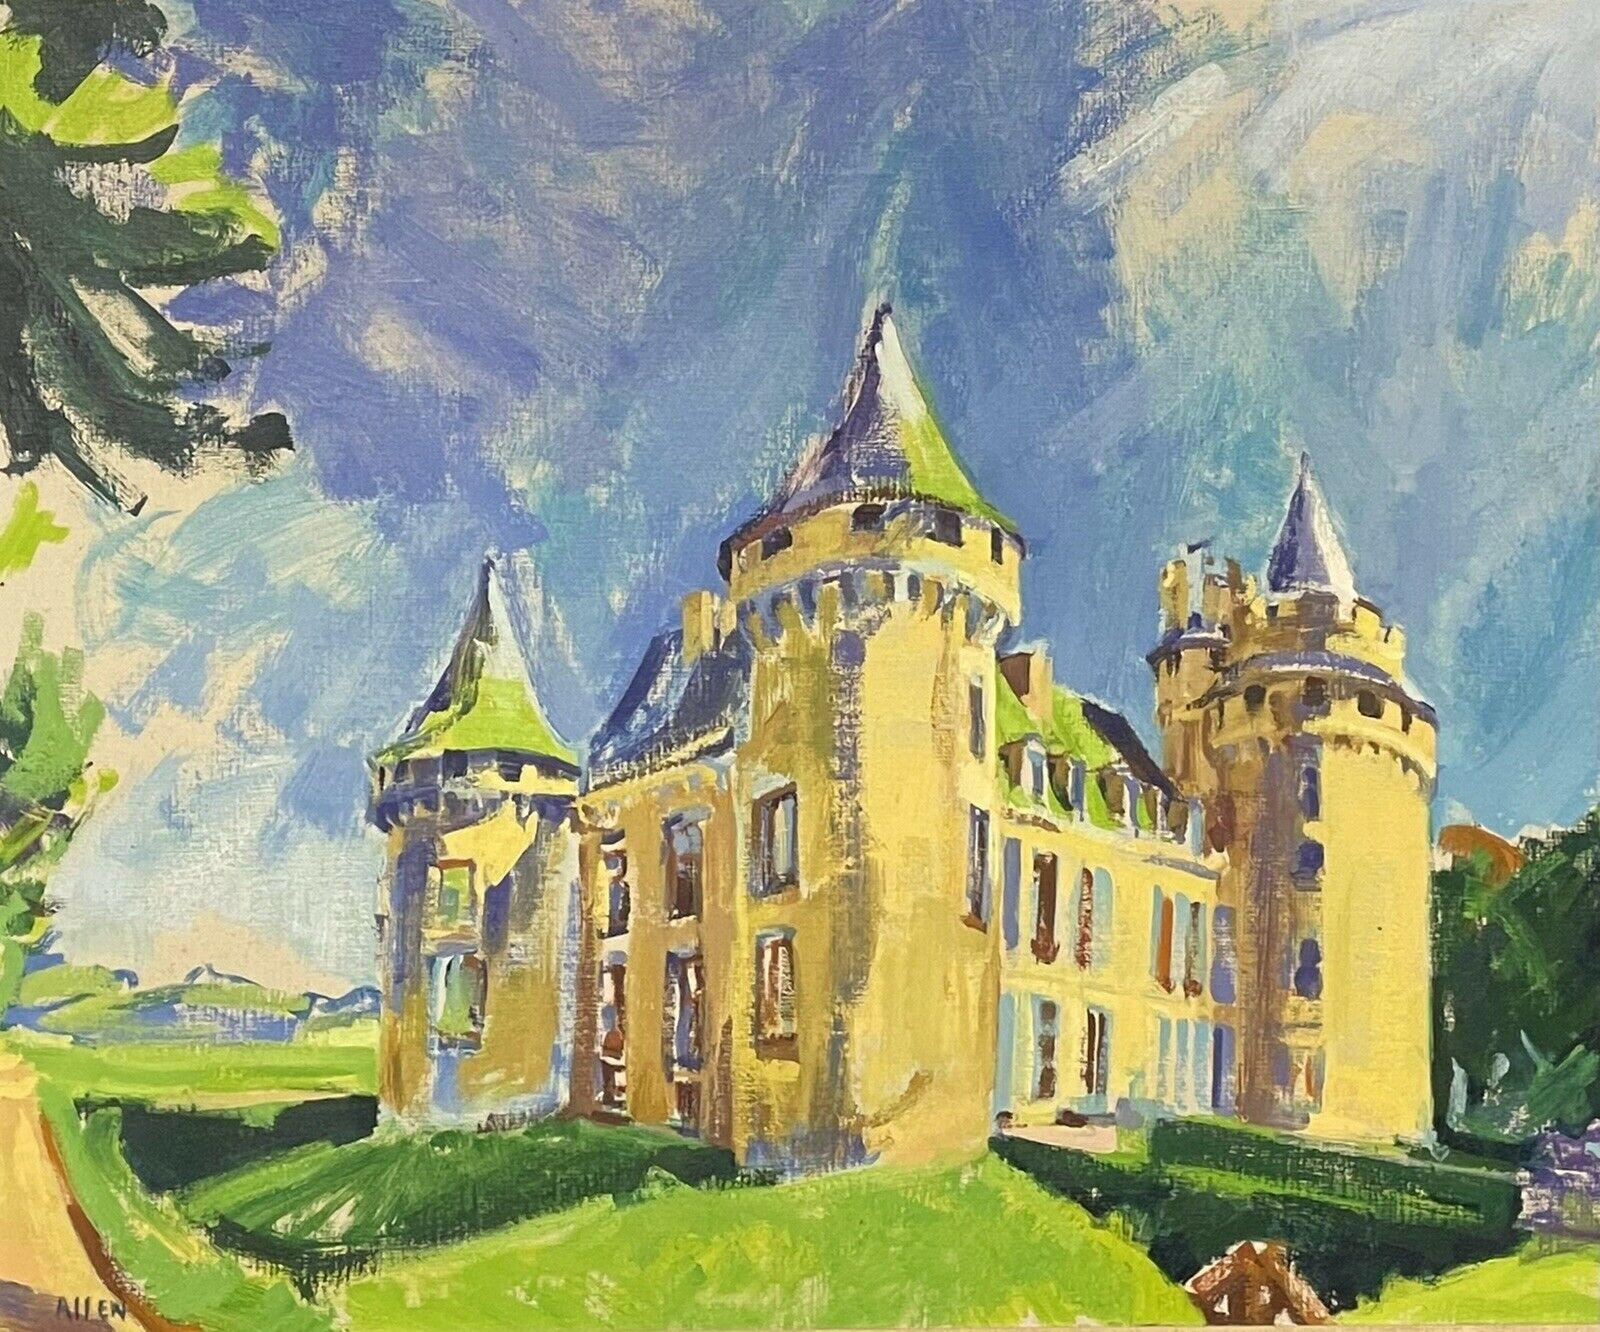 Douglas Stuart Allen Landscape Painting - Large French Impressionist Oil Huge Old Chateau Building in Parkland